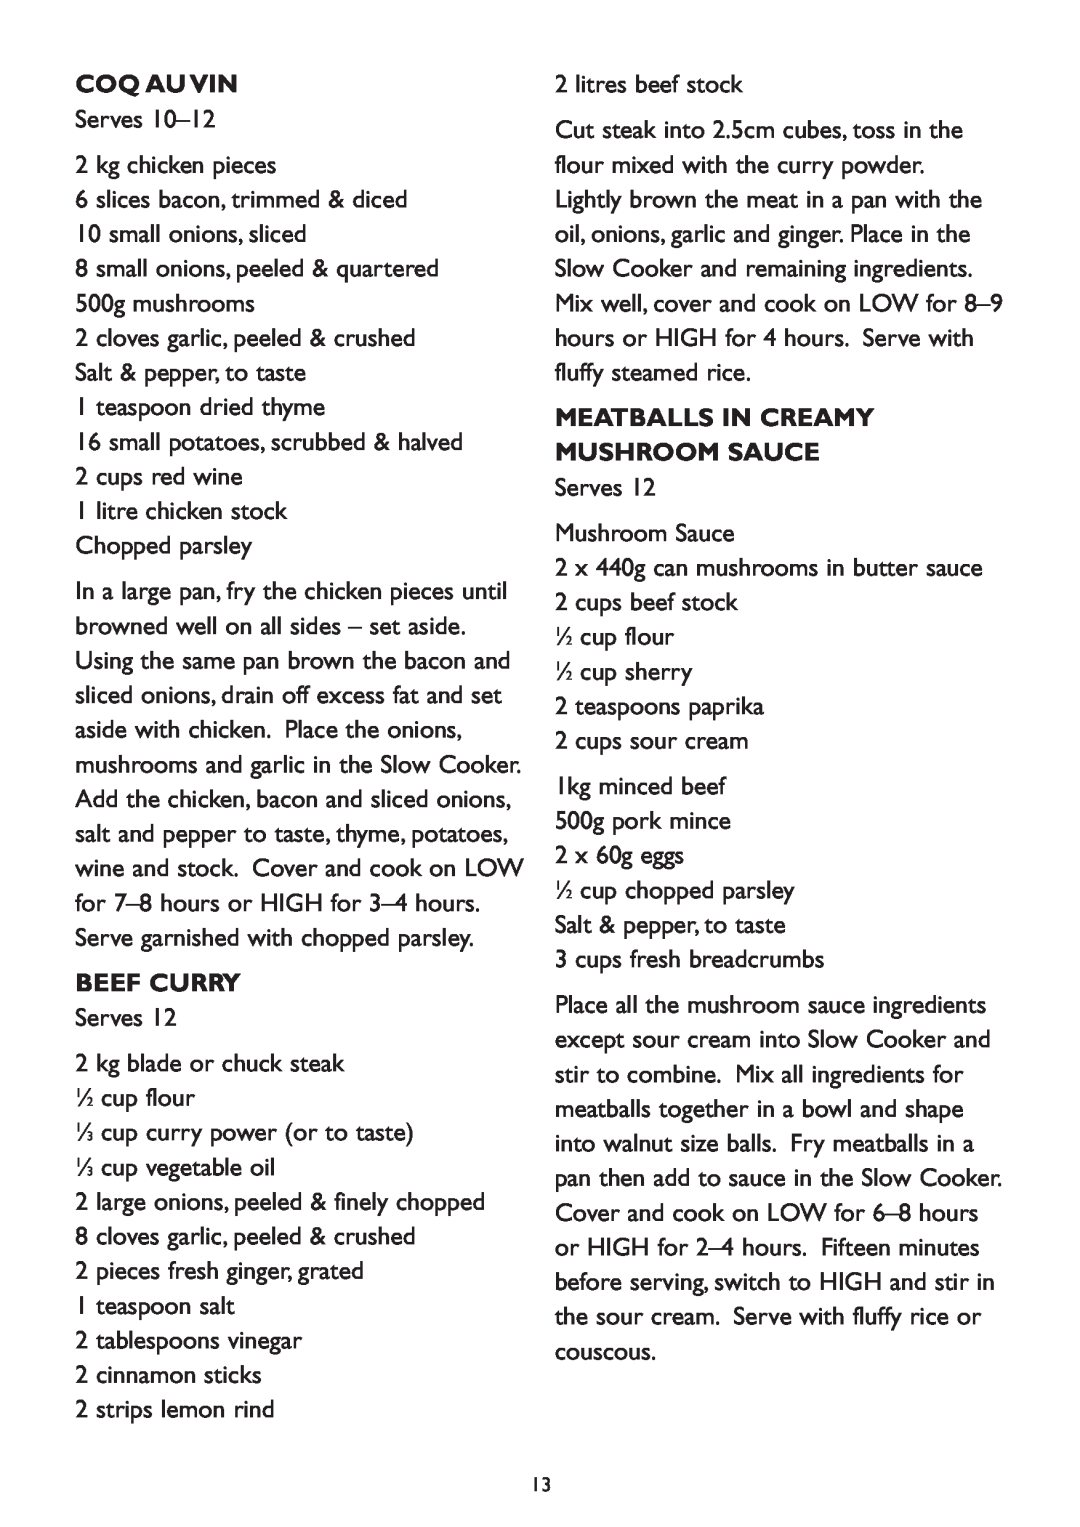 Kambrook KSC 100 manual Coq Au Vin, Beef Curry, Meatballs In Creamy Mushroom Sauce 